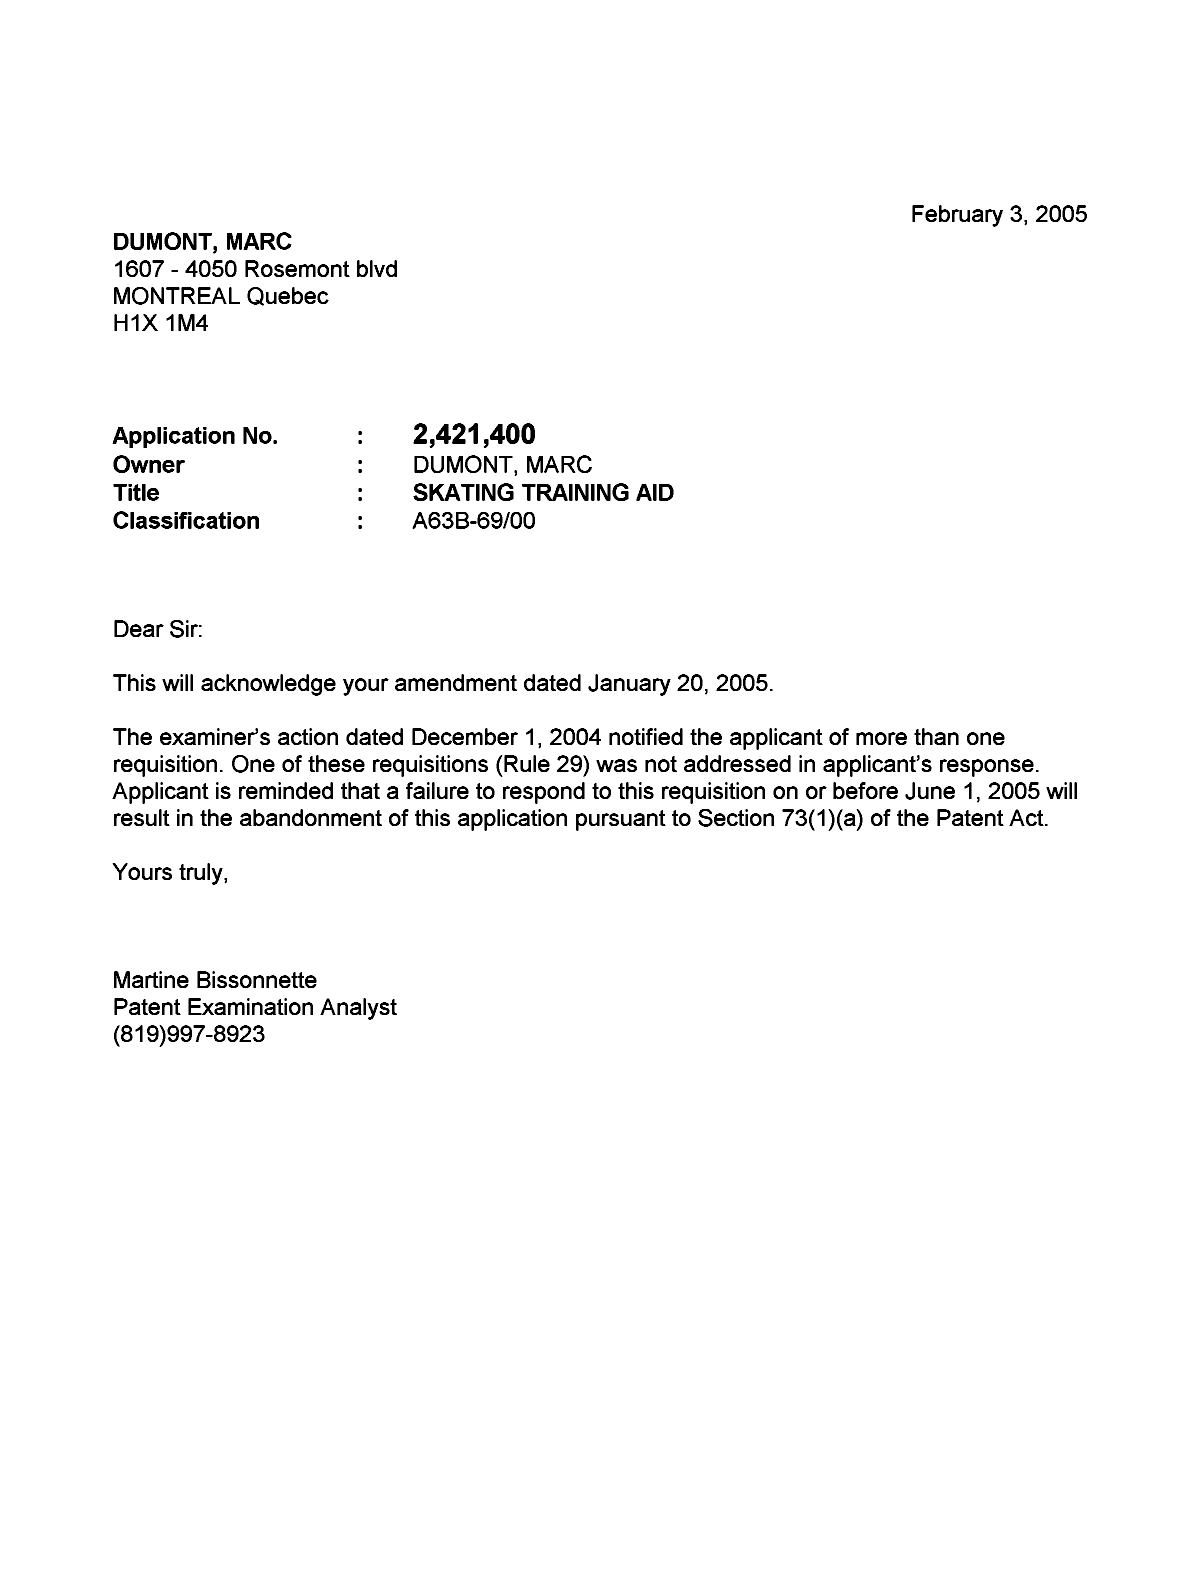 Canadian Patent Document 2421400. Correspondence 20041203. Image 1 of 1